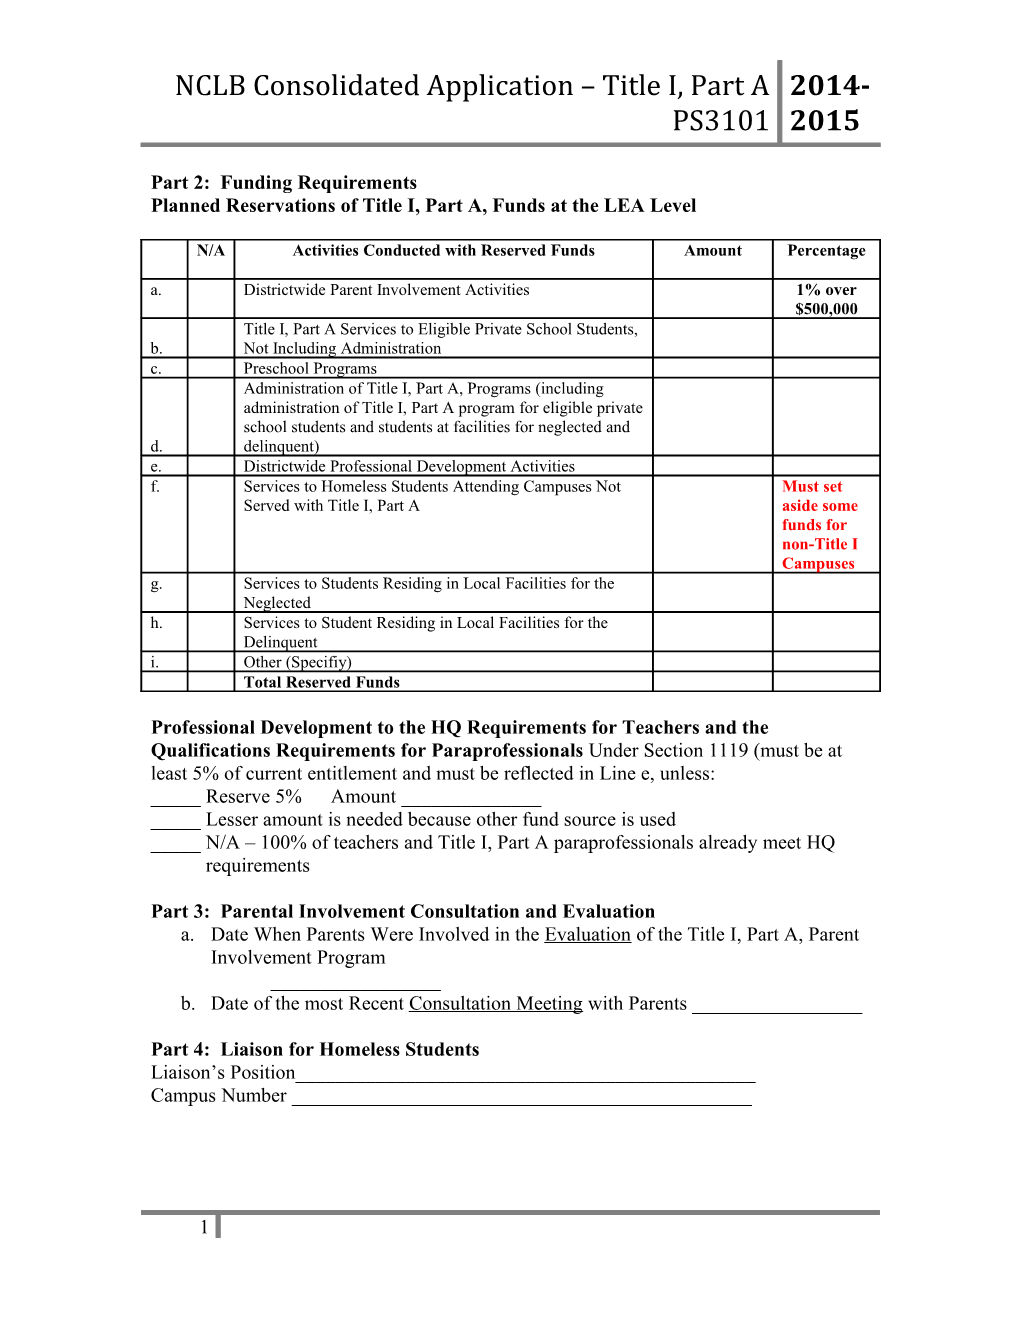 NCLB Compliance Report Title I, Part A